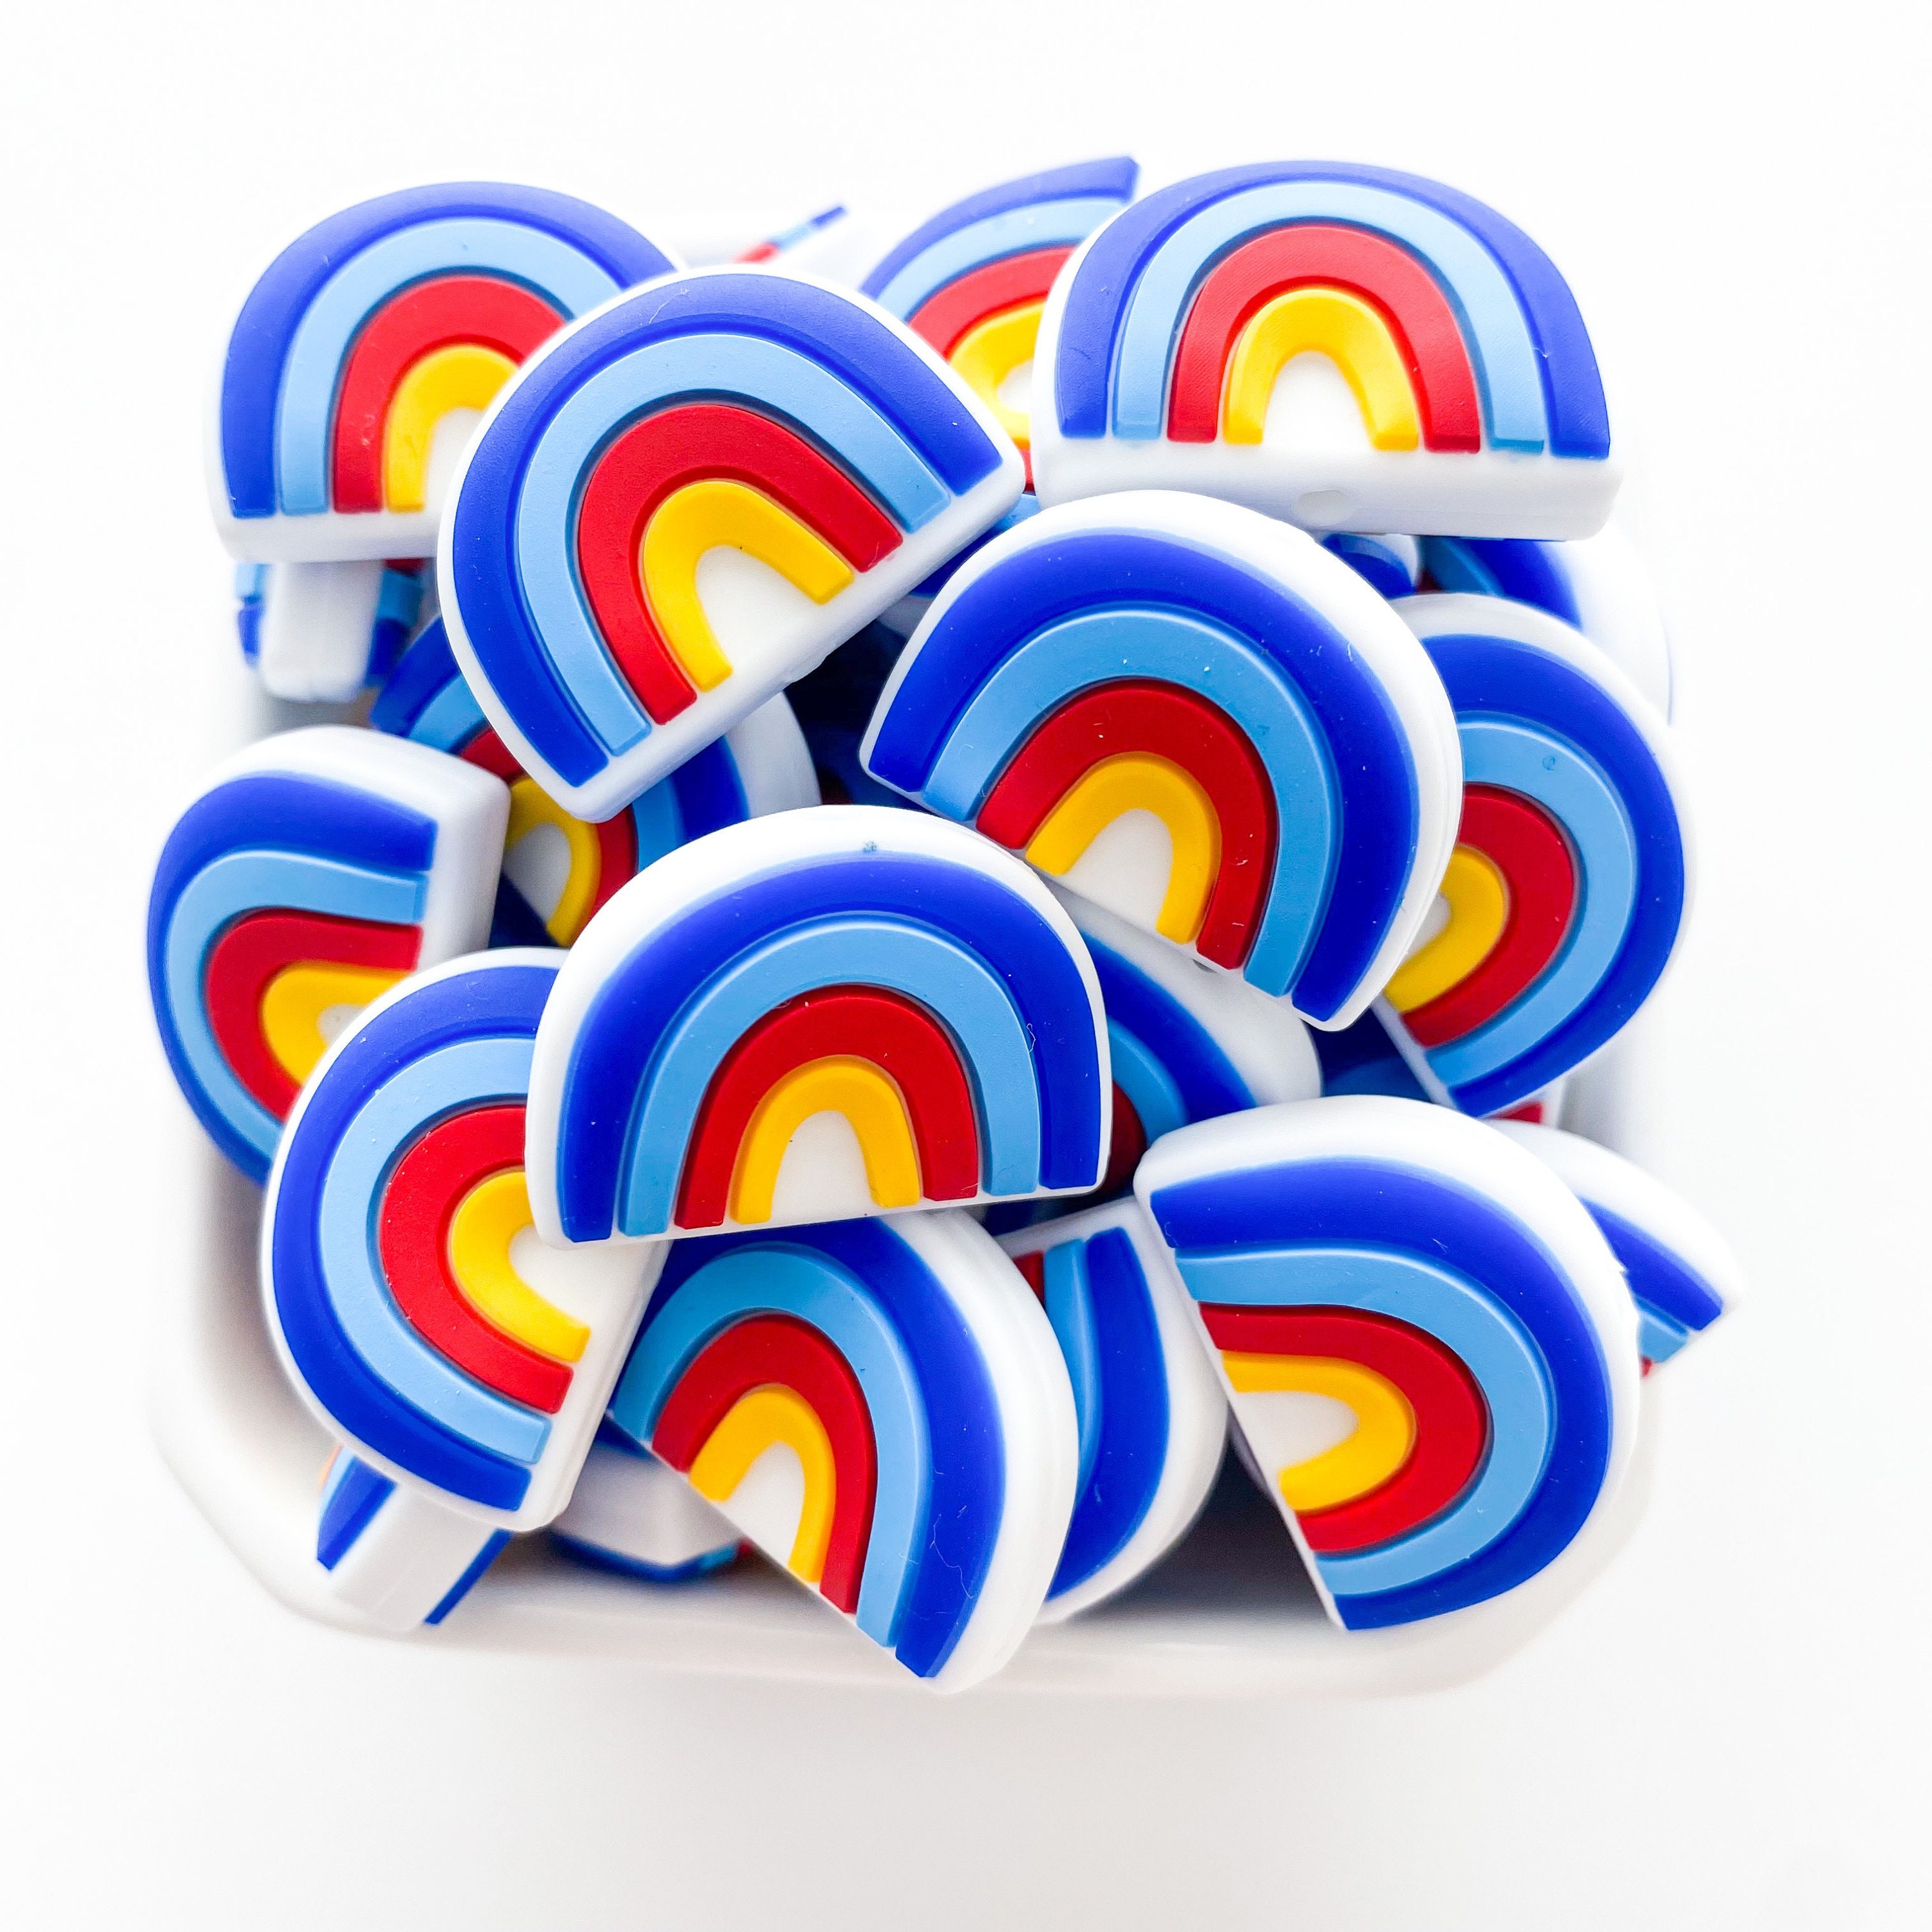 Primary Rainbow 50 or 100 BULK Round Silicone Beads